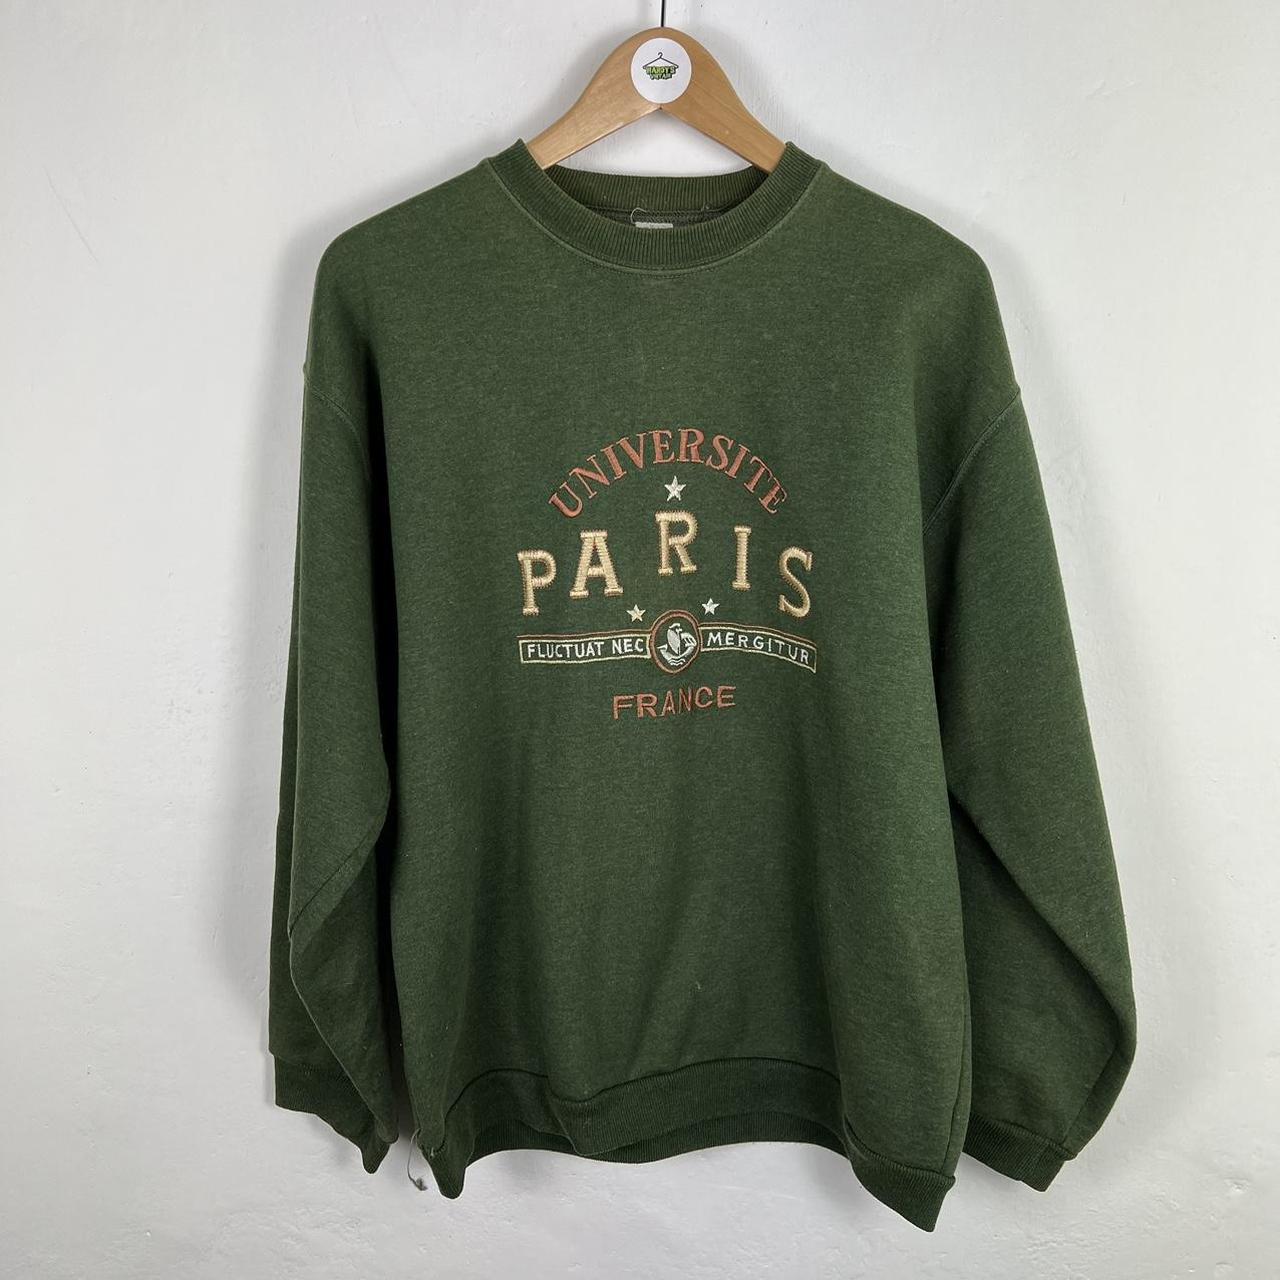 Paris tourist sweatshirt medium